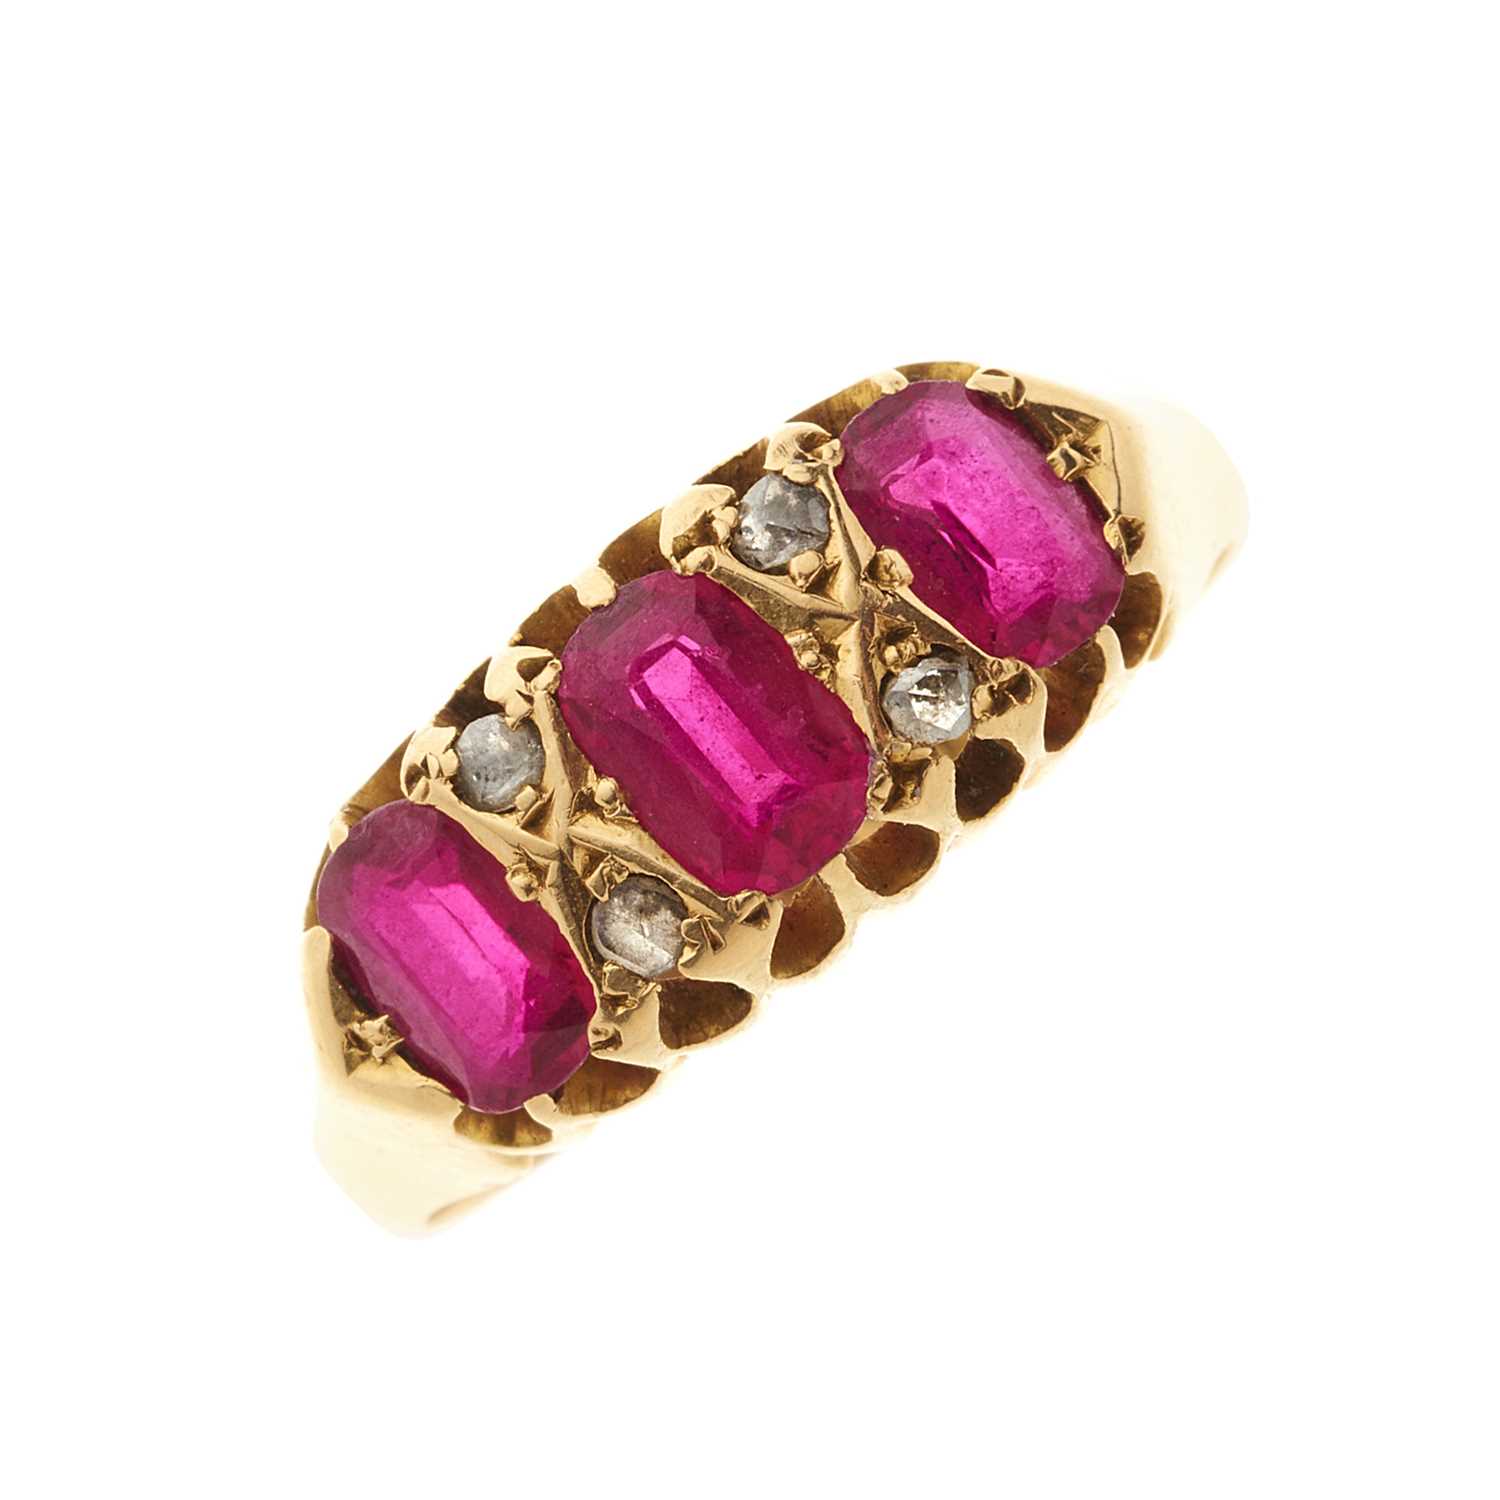 Lot 108 - An Edwardian 18ct gold ruby and diamond dress ring